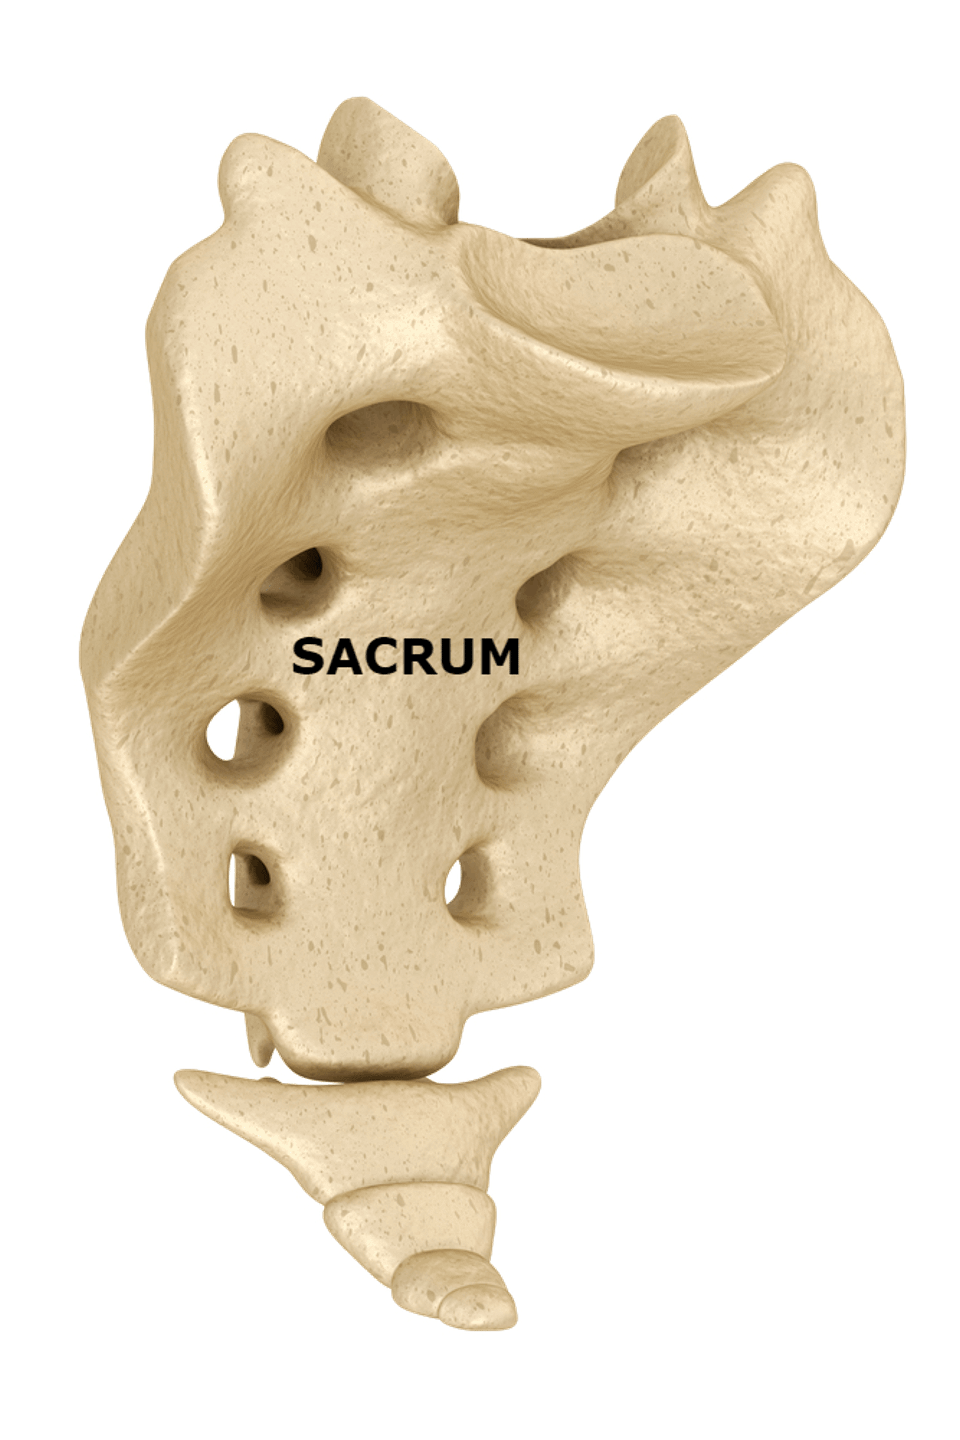 Sacrum labeled